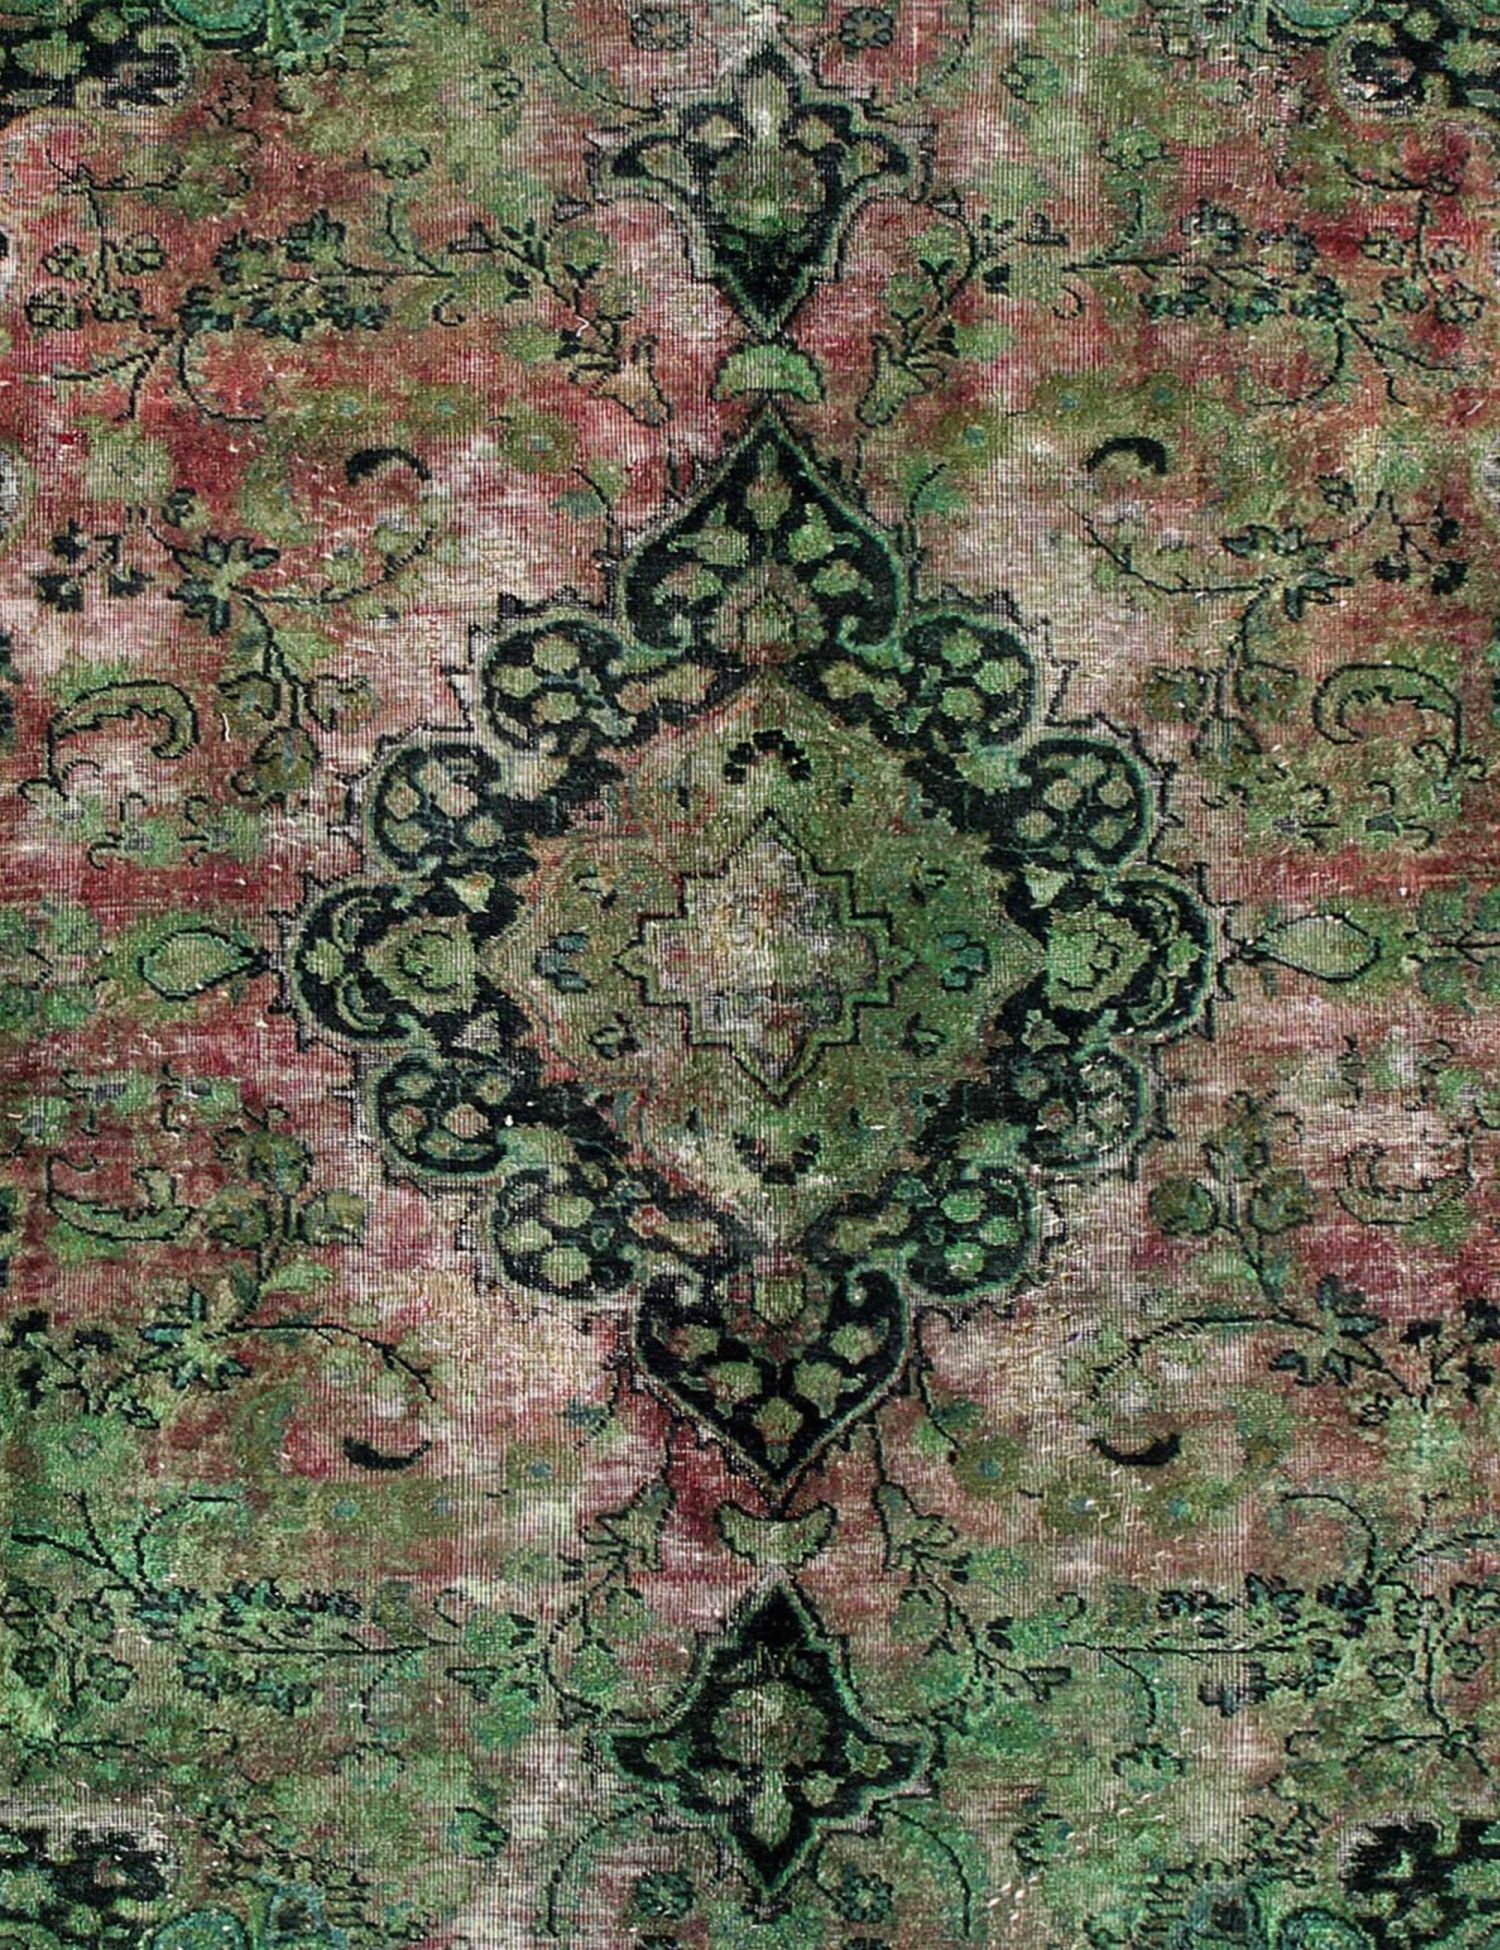 Persialaiset vintage matot  vihreä <br/>284 x 192 cm